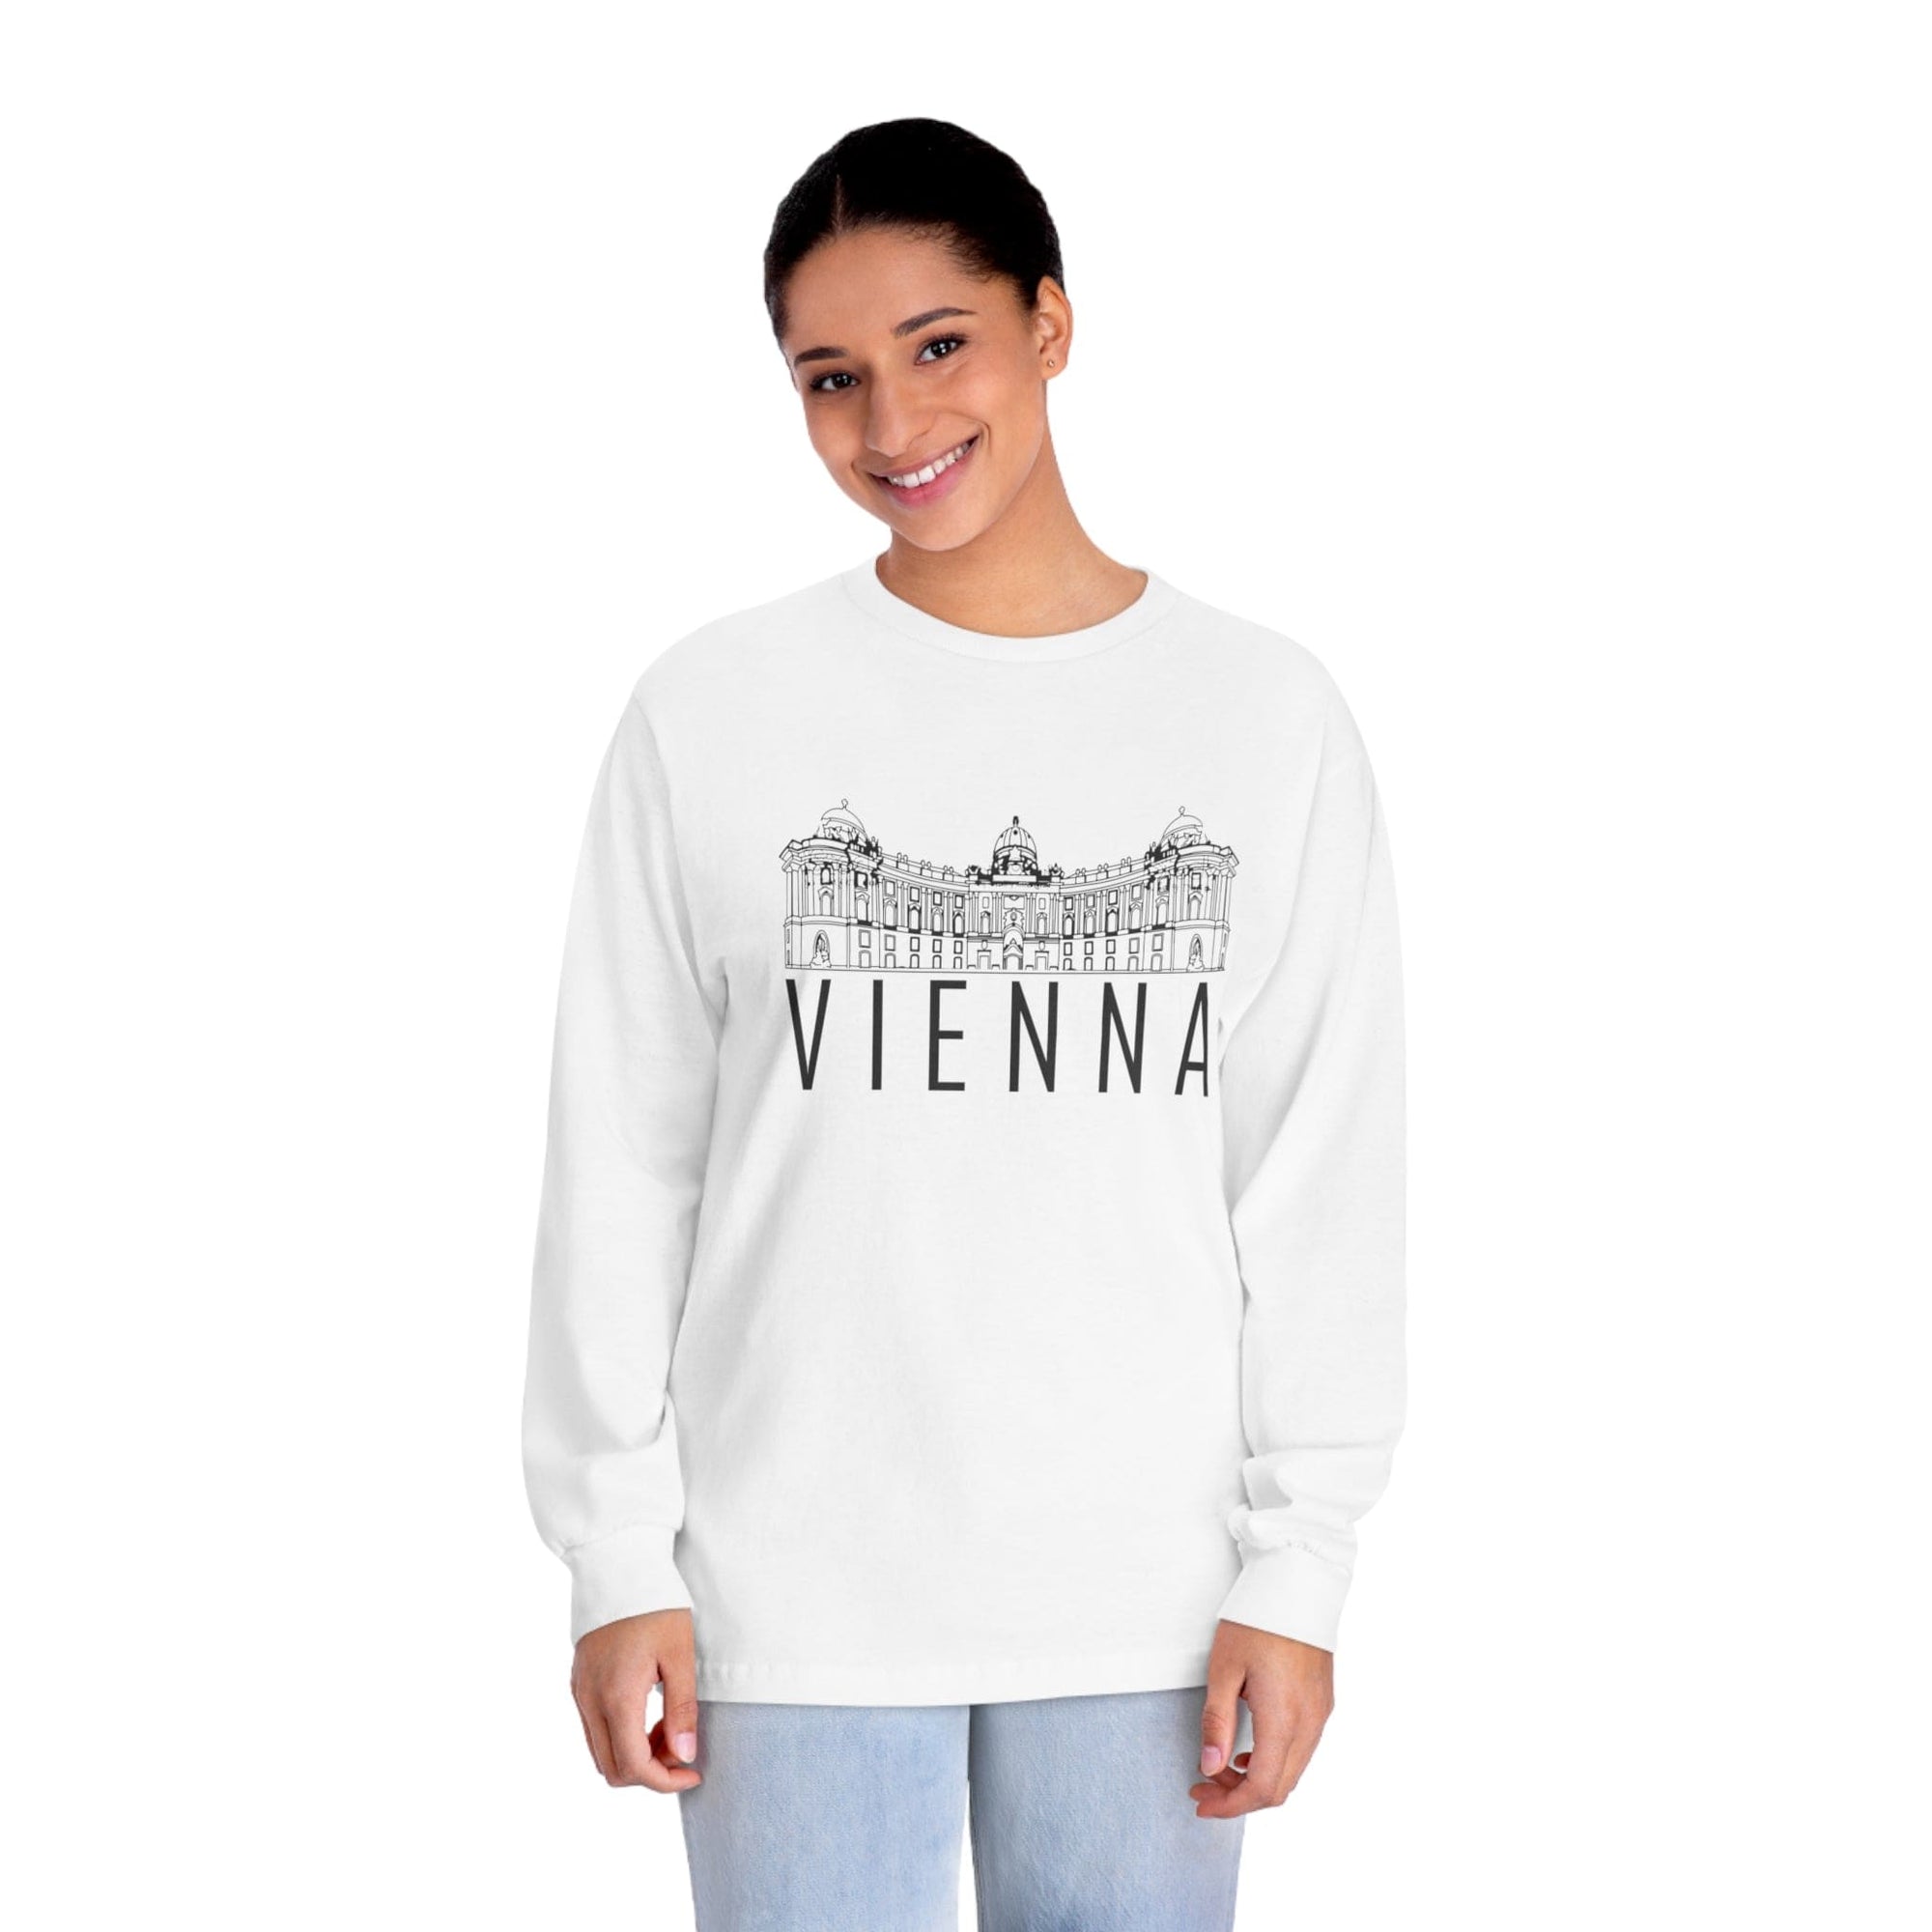 VIENNA – Trendy Design, Premium Long Sleeve Tee